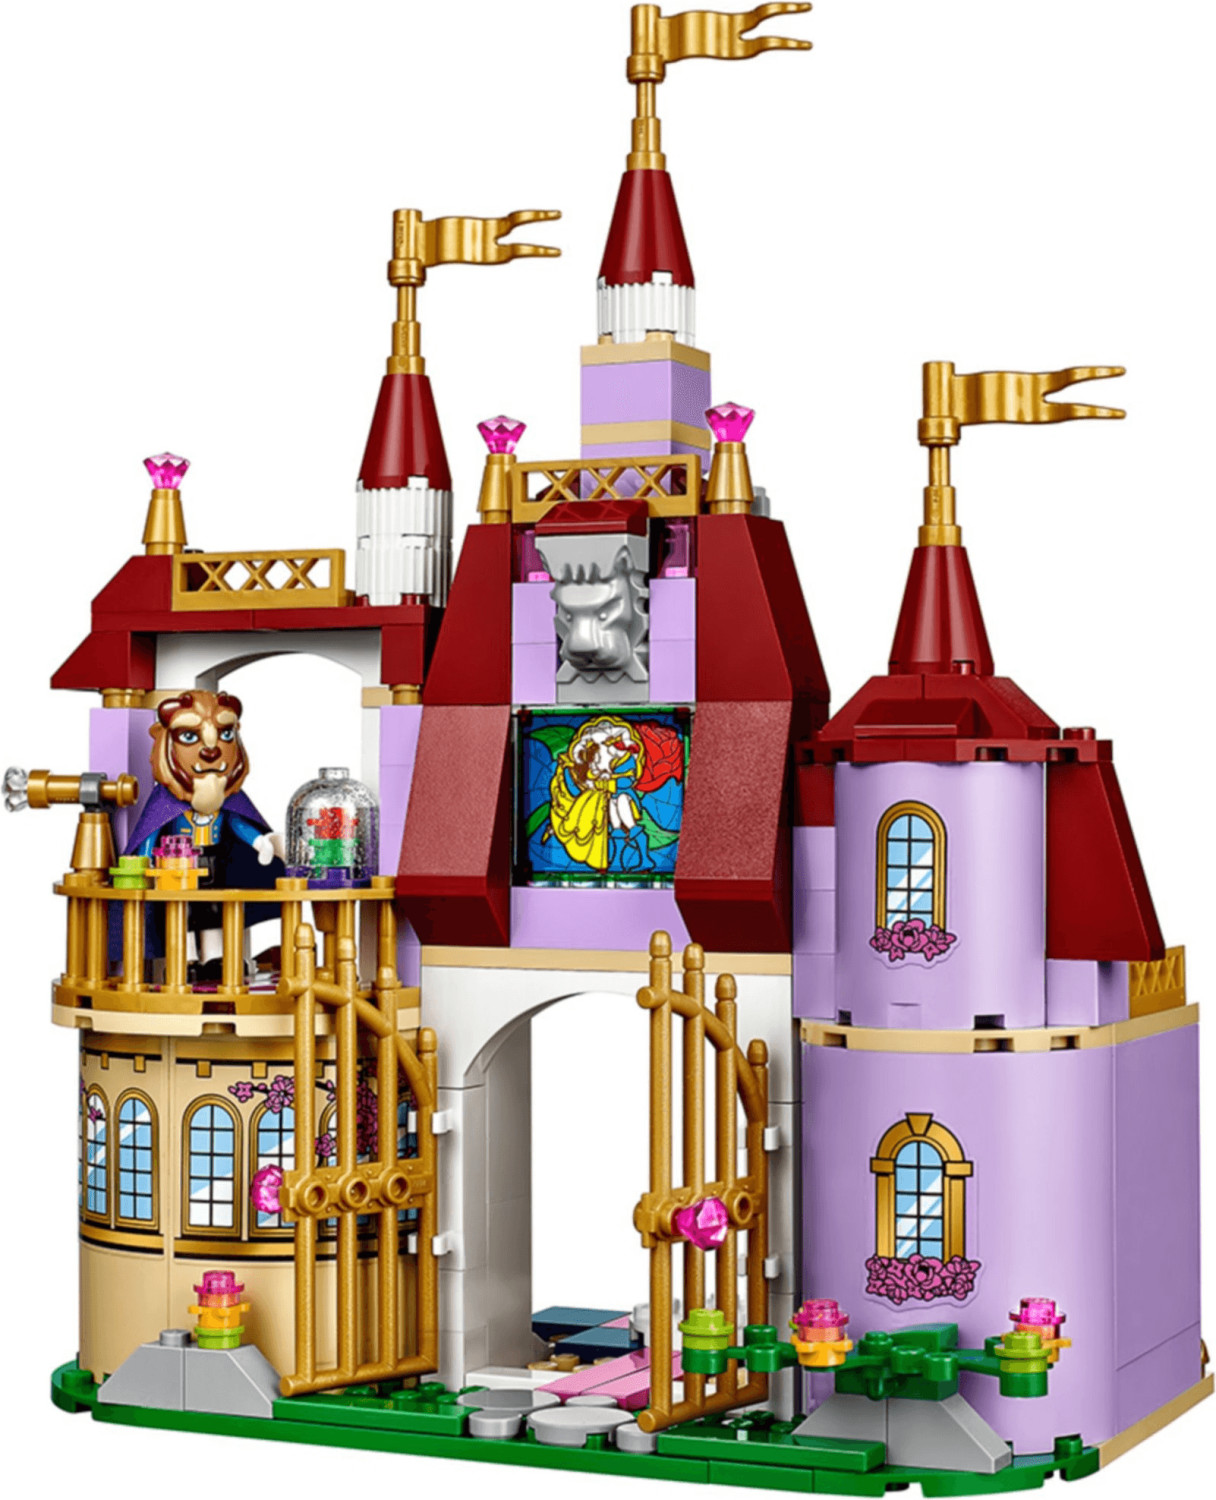 LEGO Disney Princess - Belles bezauberndes Schloss (41067) ab 105,69 € |  Preisvergleich bei